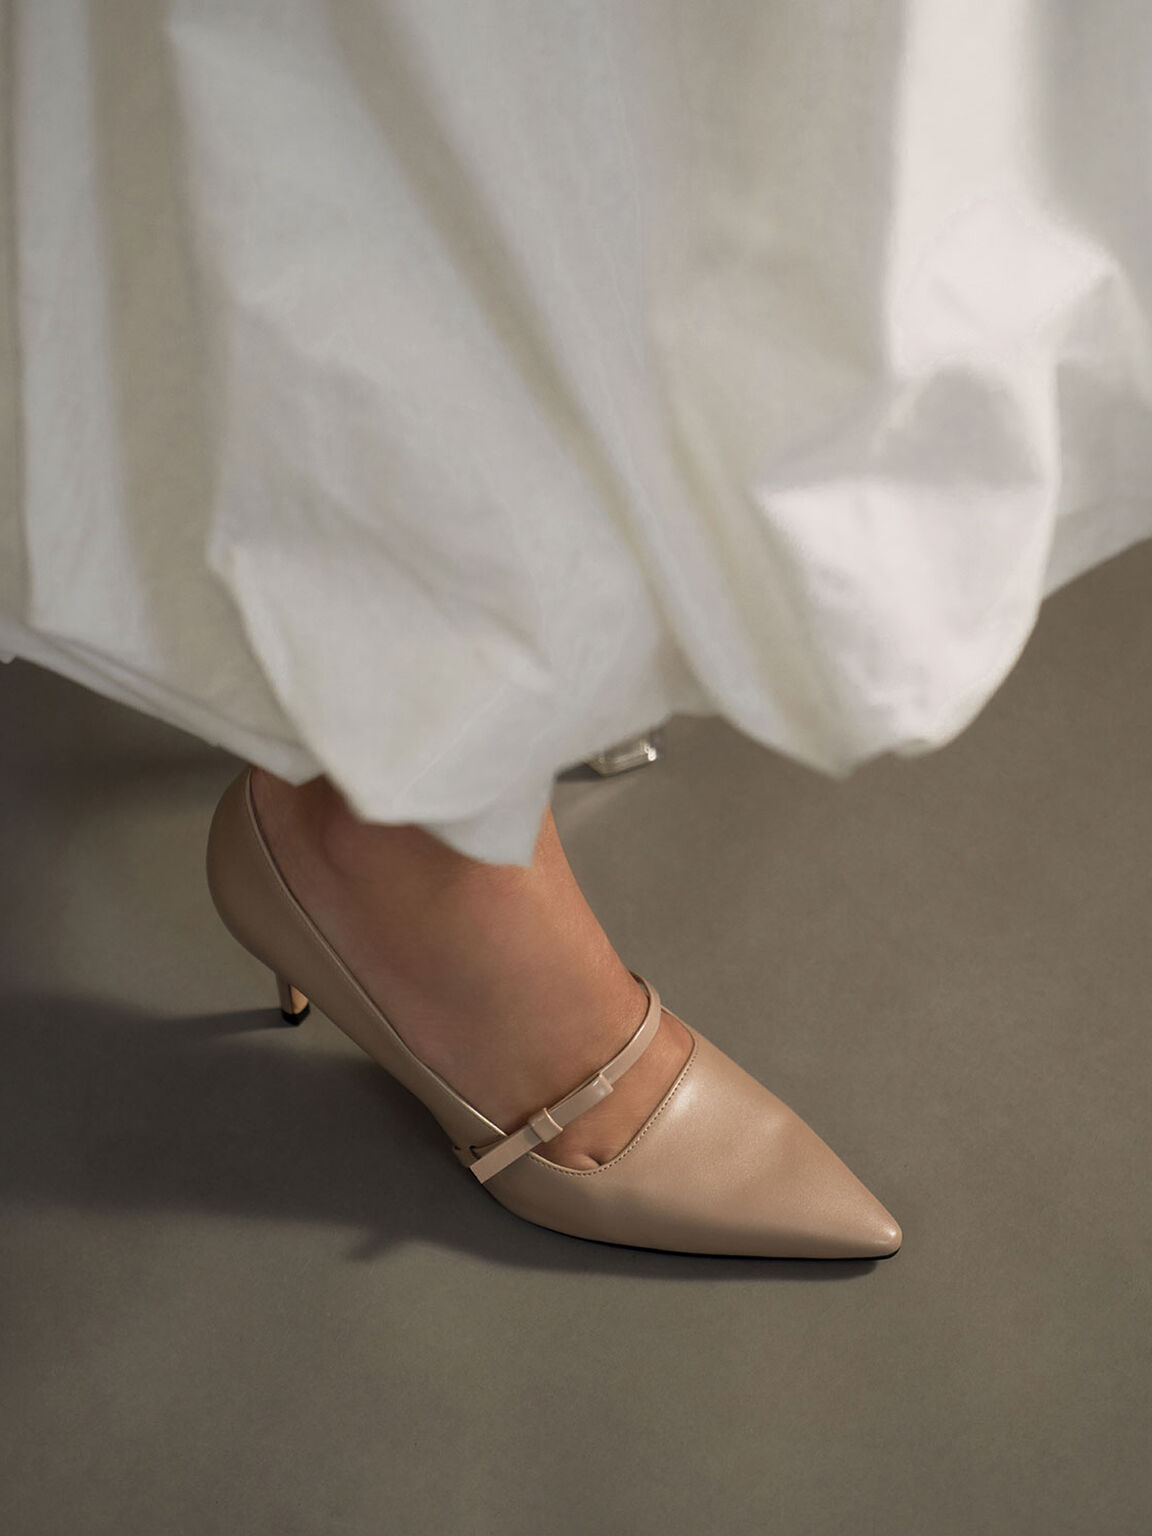 Mary Jane Stiletto Heel Court Shoes, Beige, hi-res